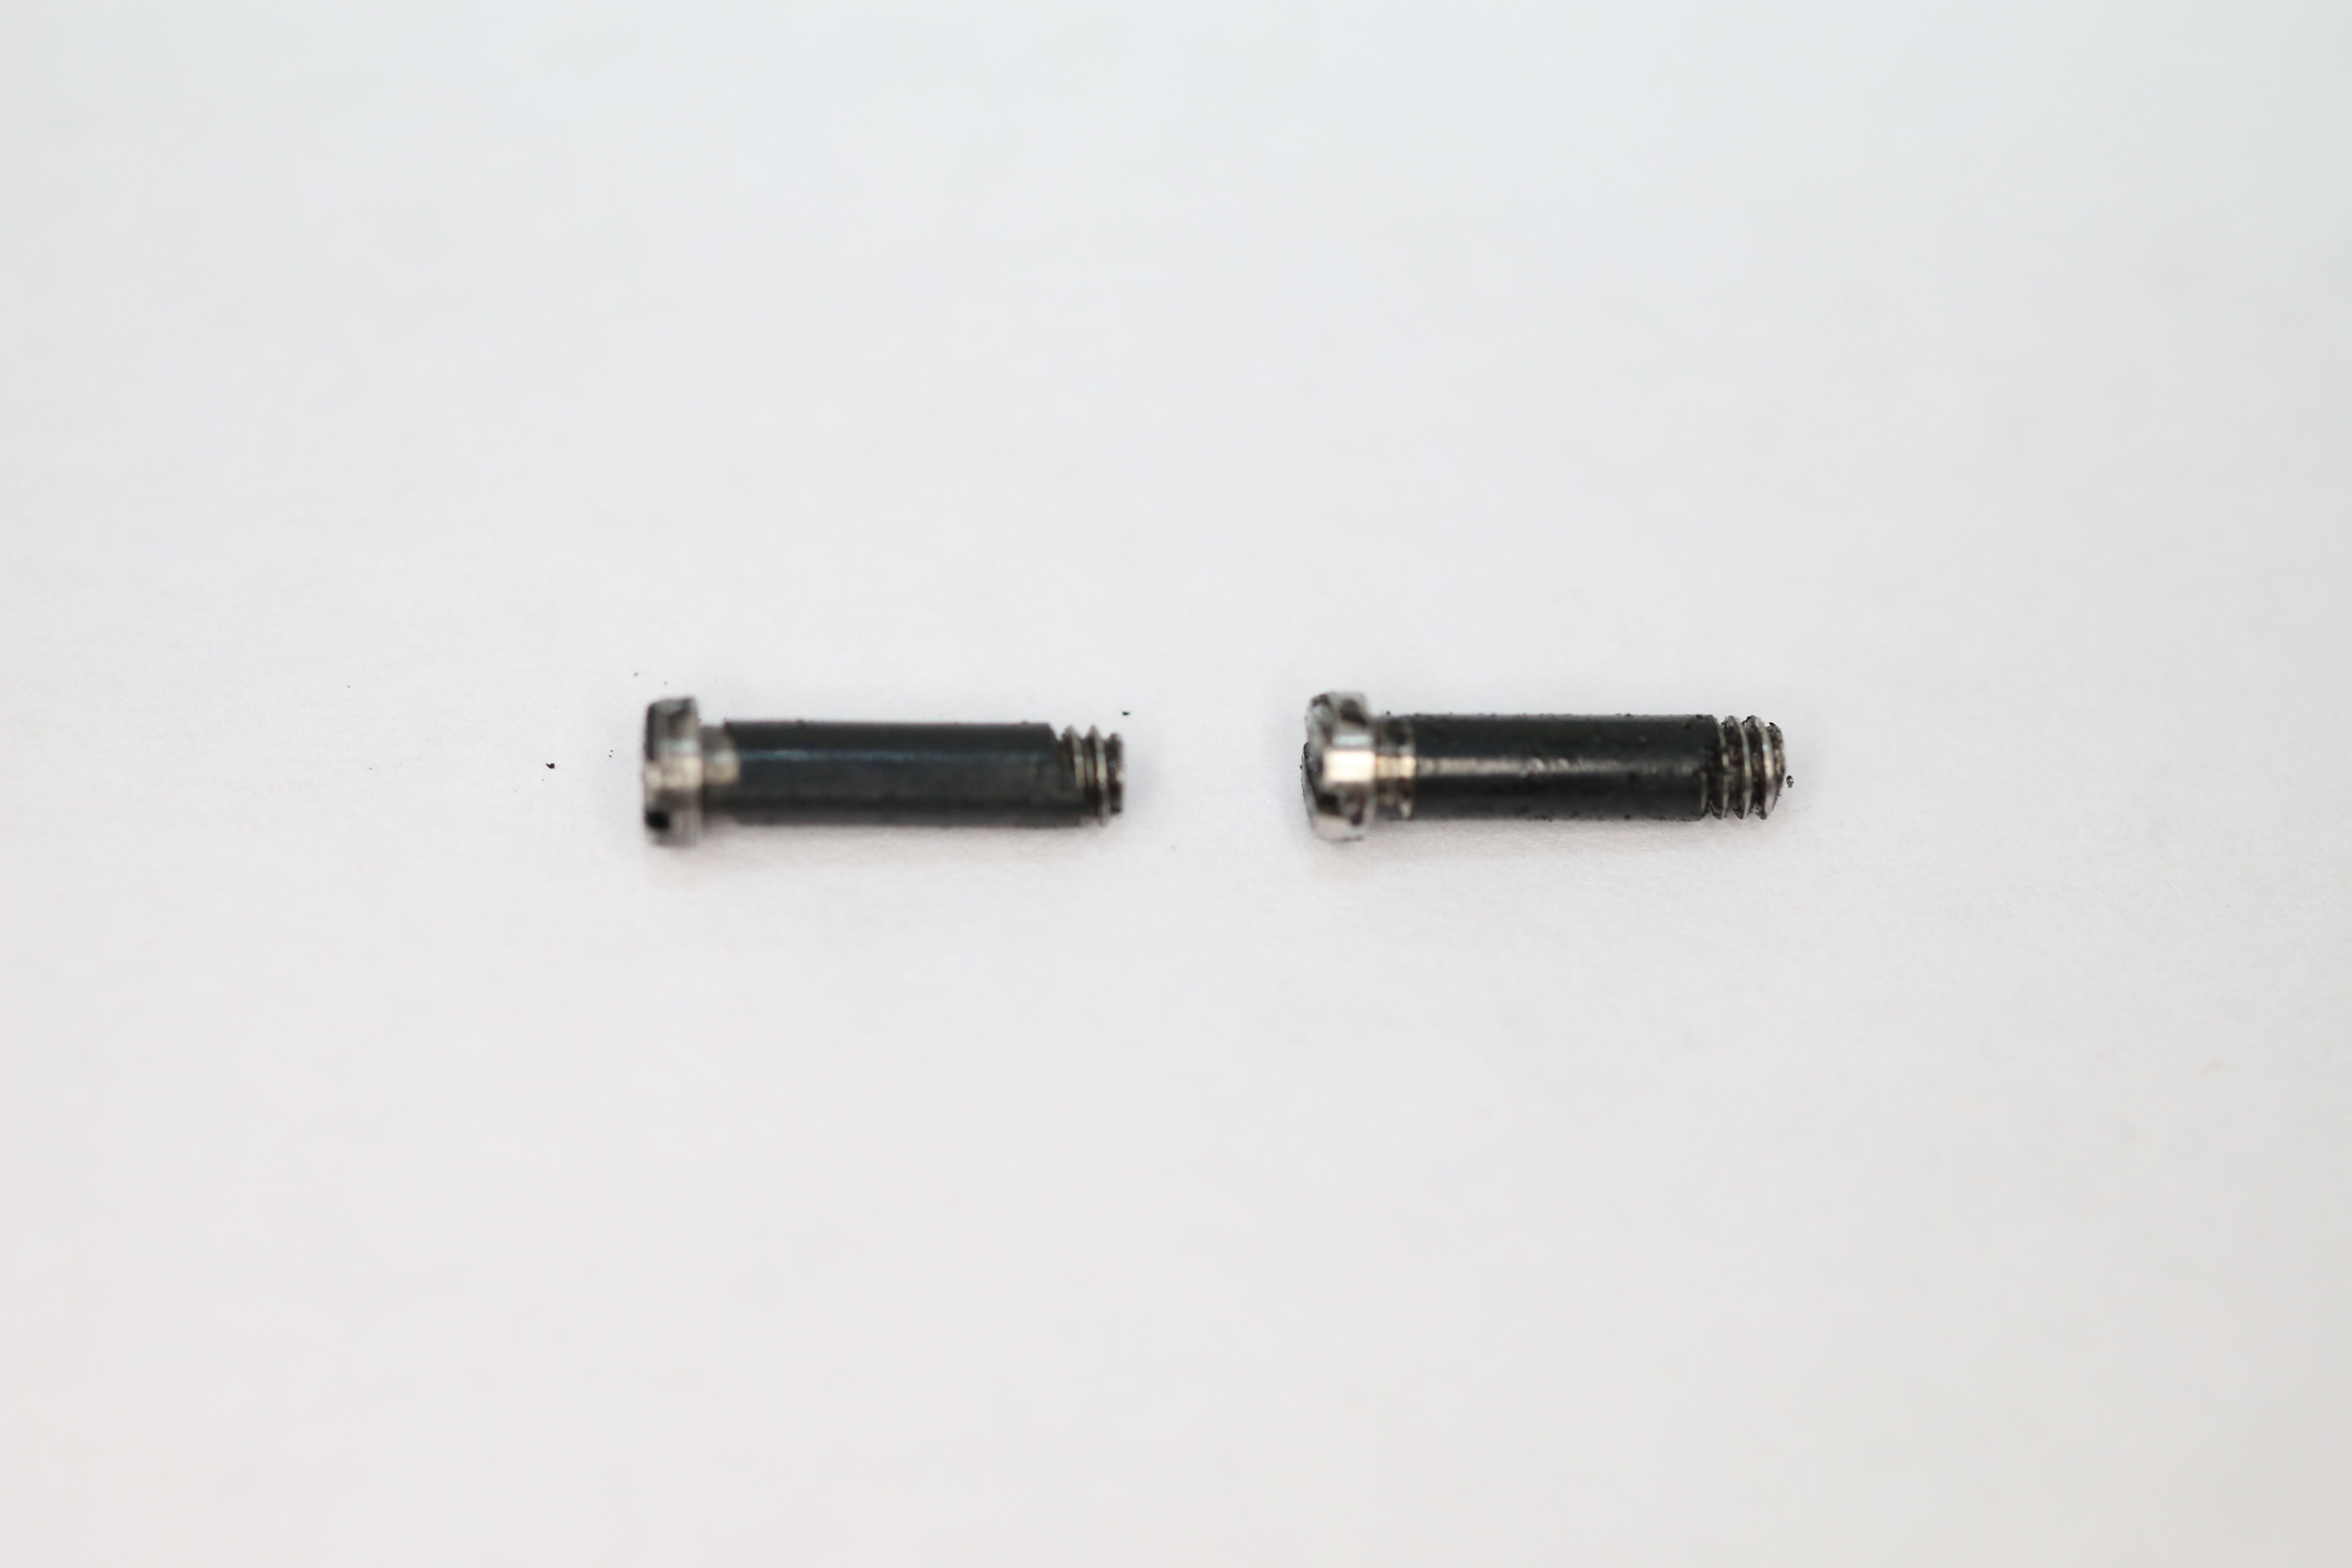 oakley replacement screws